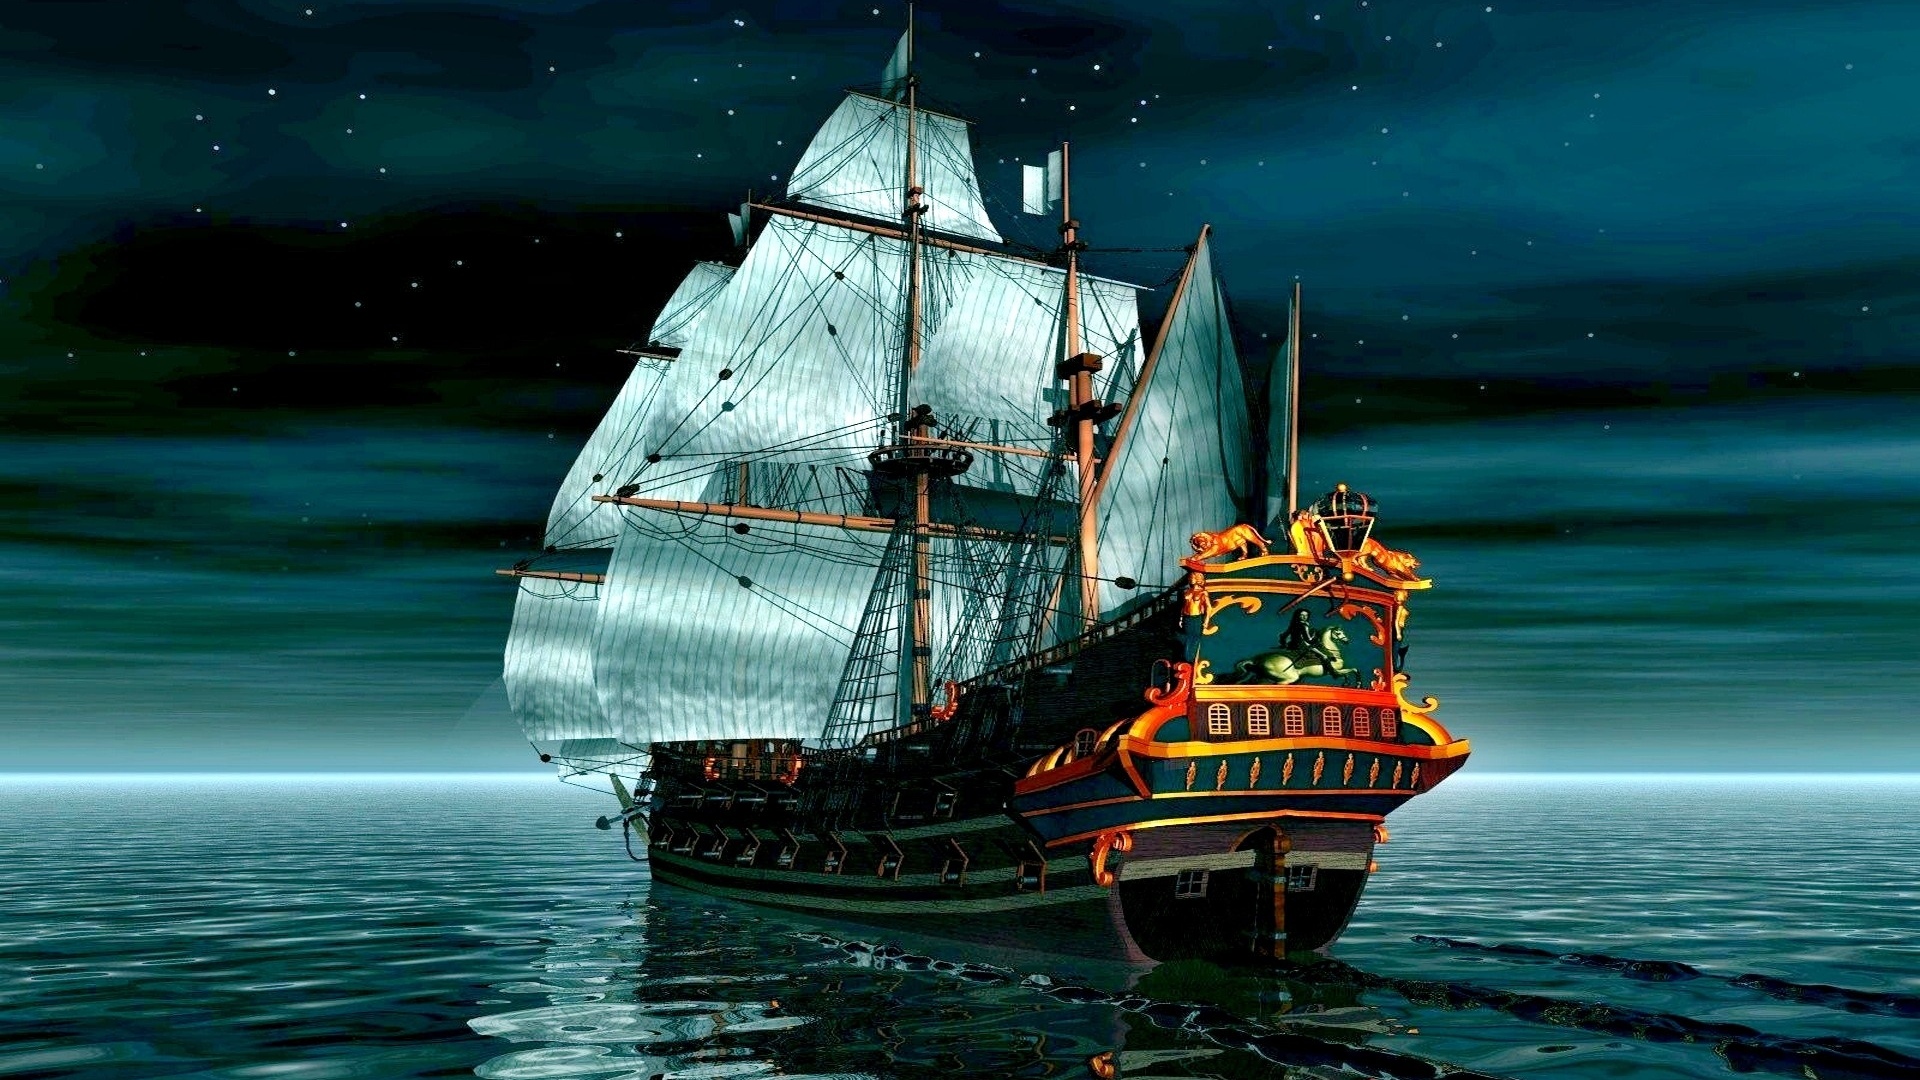 General 1920x1080 sailing ship sea moon rays night digital art